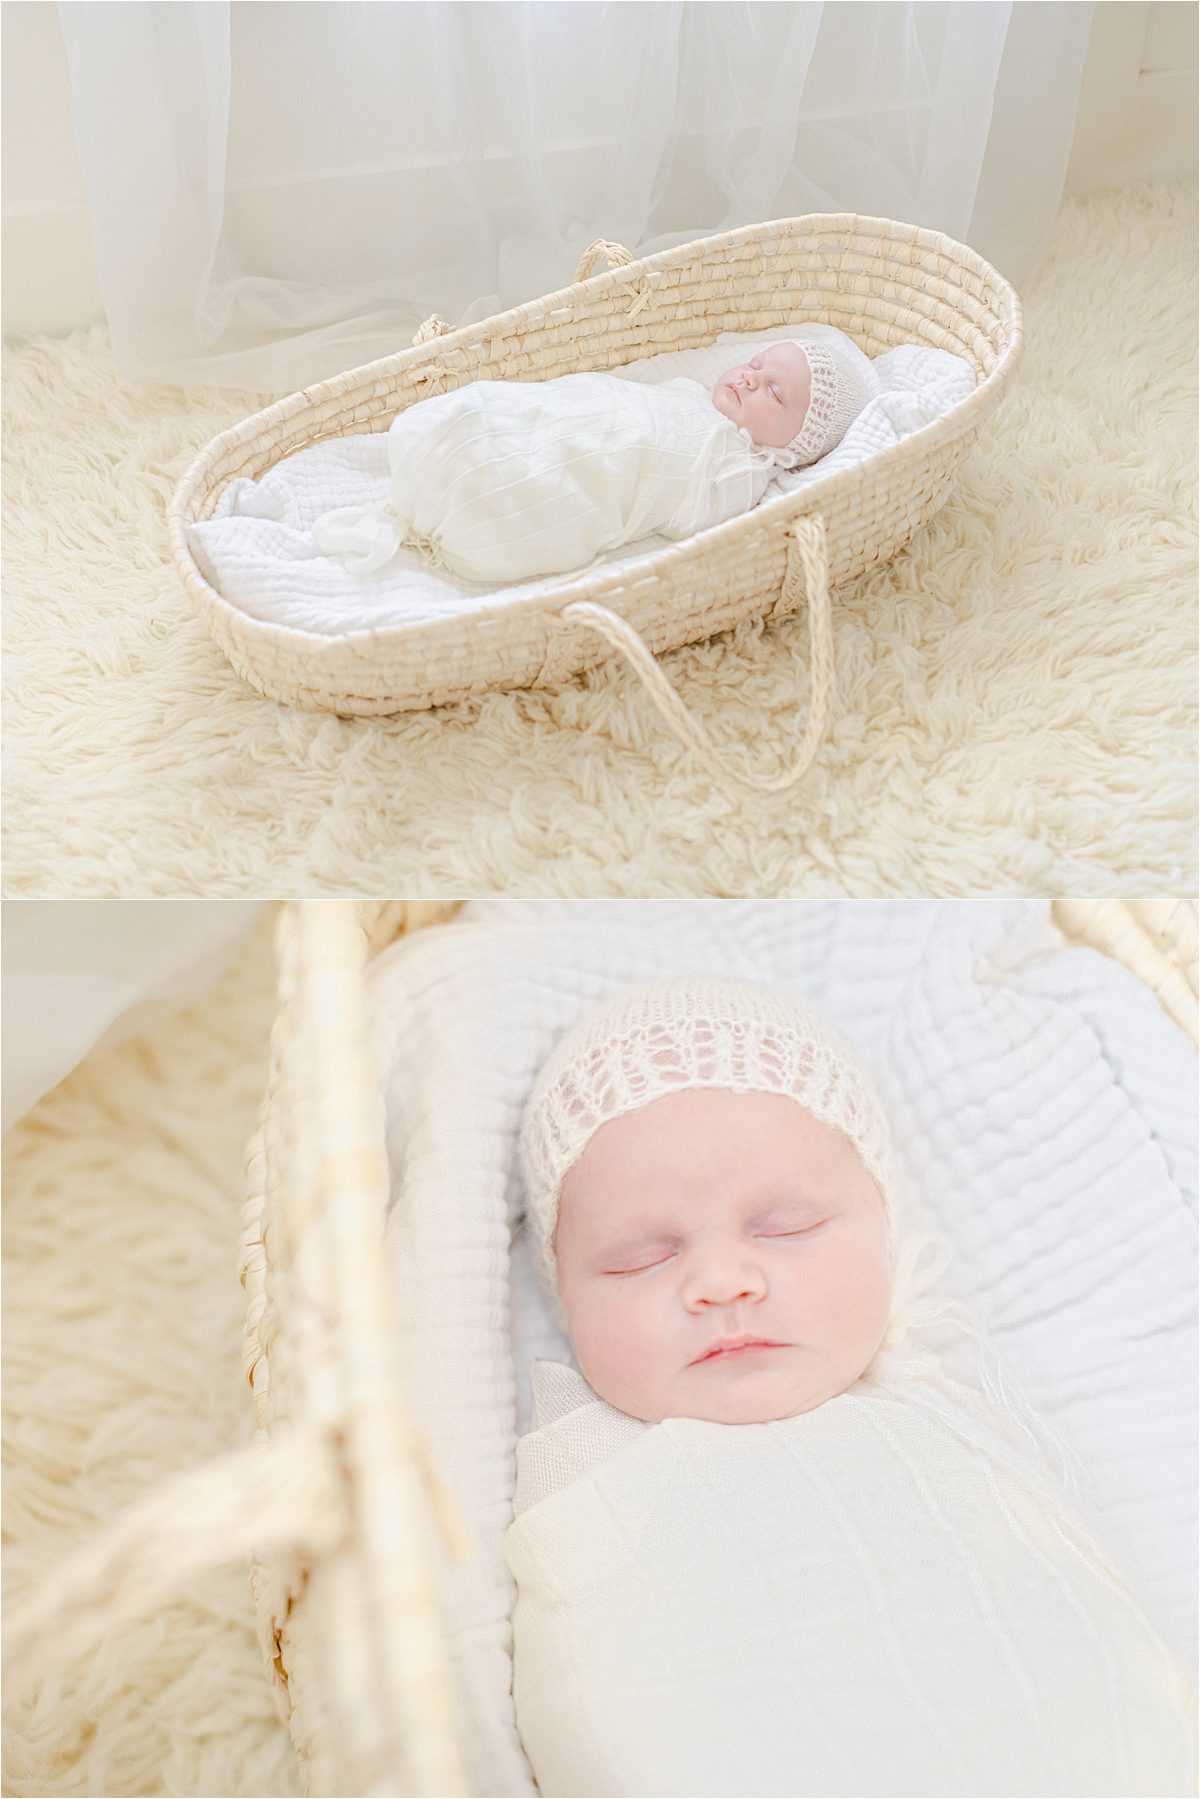 Atlanta newborn portrait photography of bundled up infant in bassinet